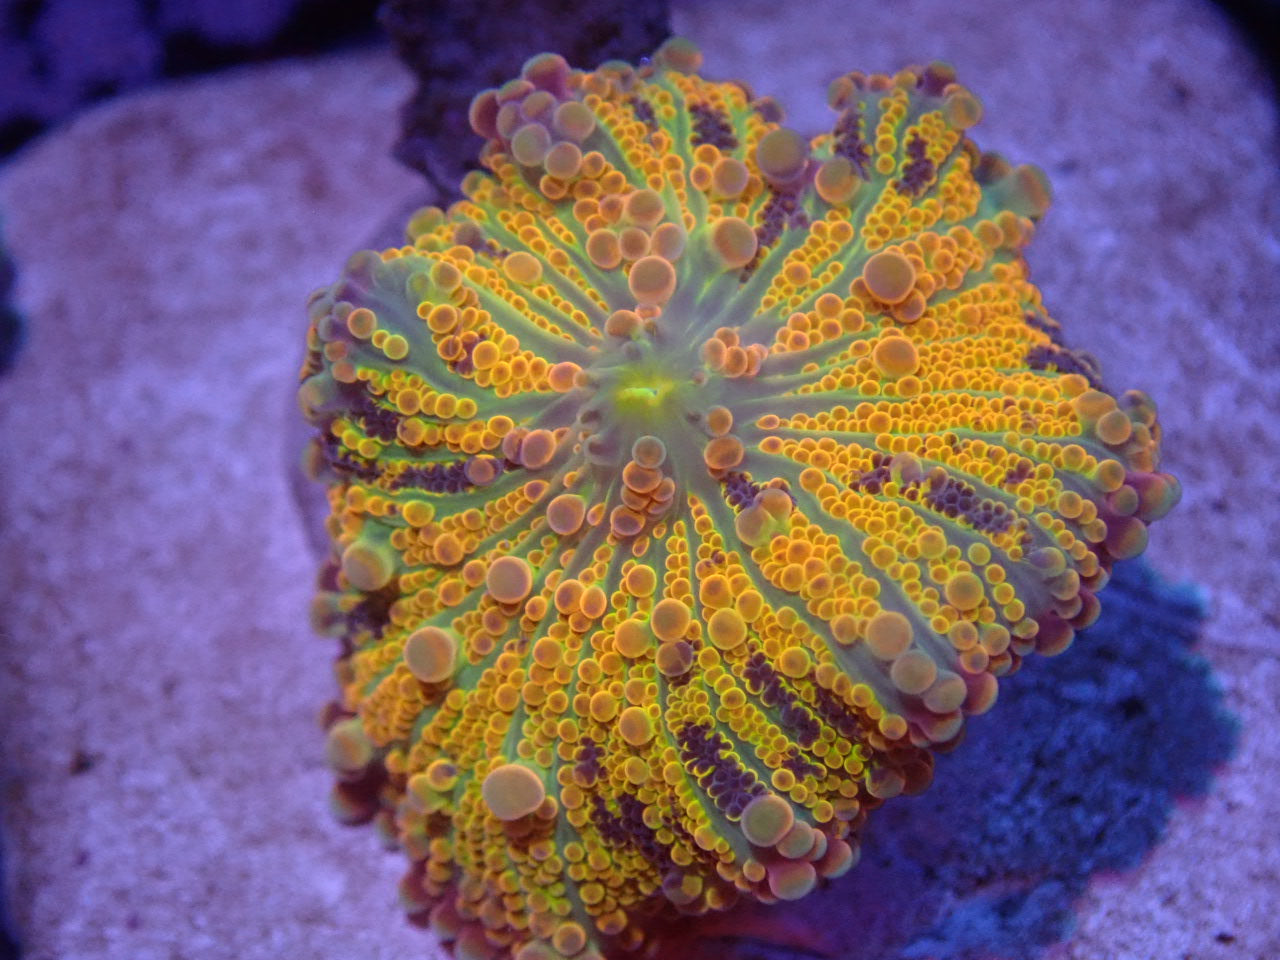 Yellow Rainbow Ricordea Yuma Mushroom - Coral's Coral